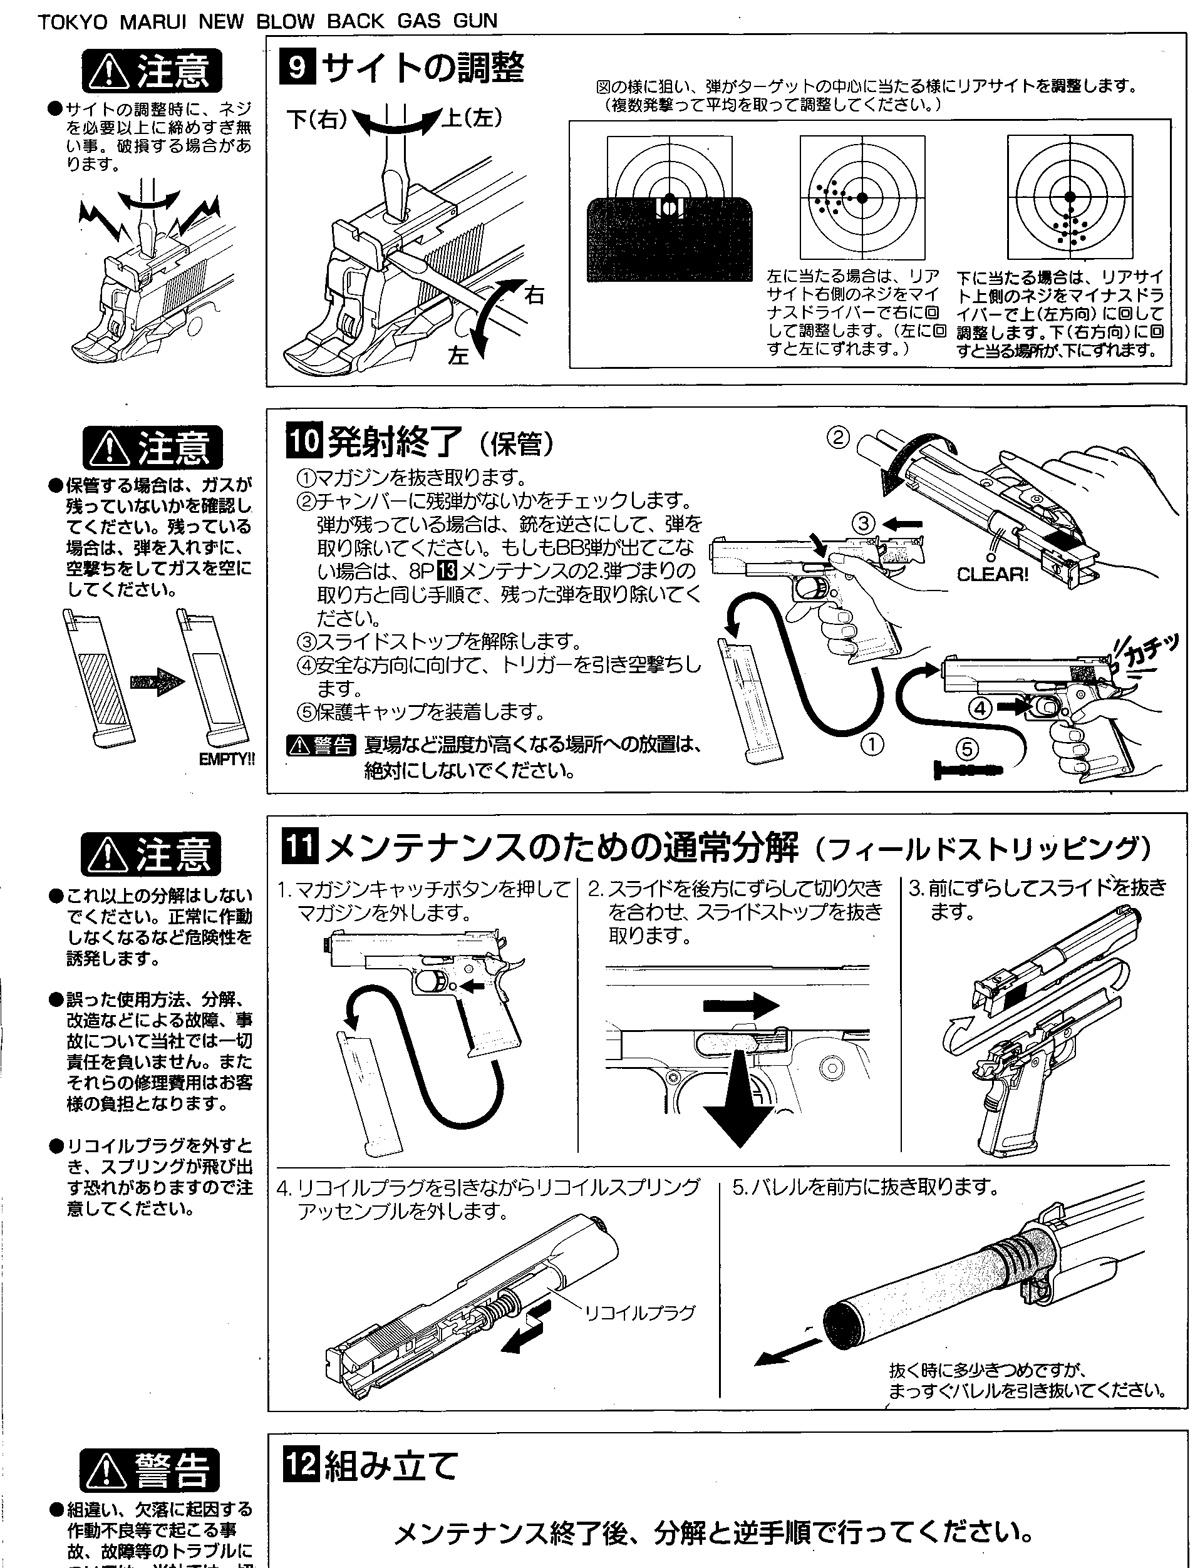 Free Download Manual For Tokyo Marui Hi Capa Gas Blowback Gun Instruction User Manual Evike Exclusive Evike Com Airsoft Superstore